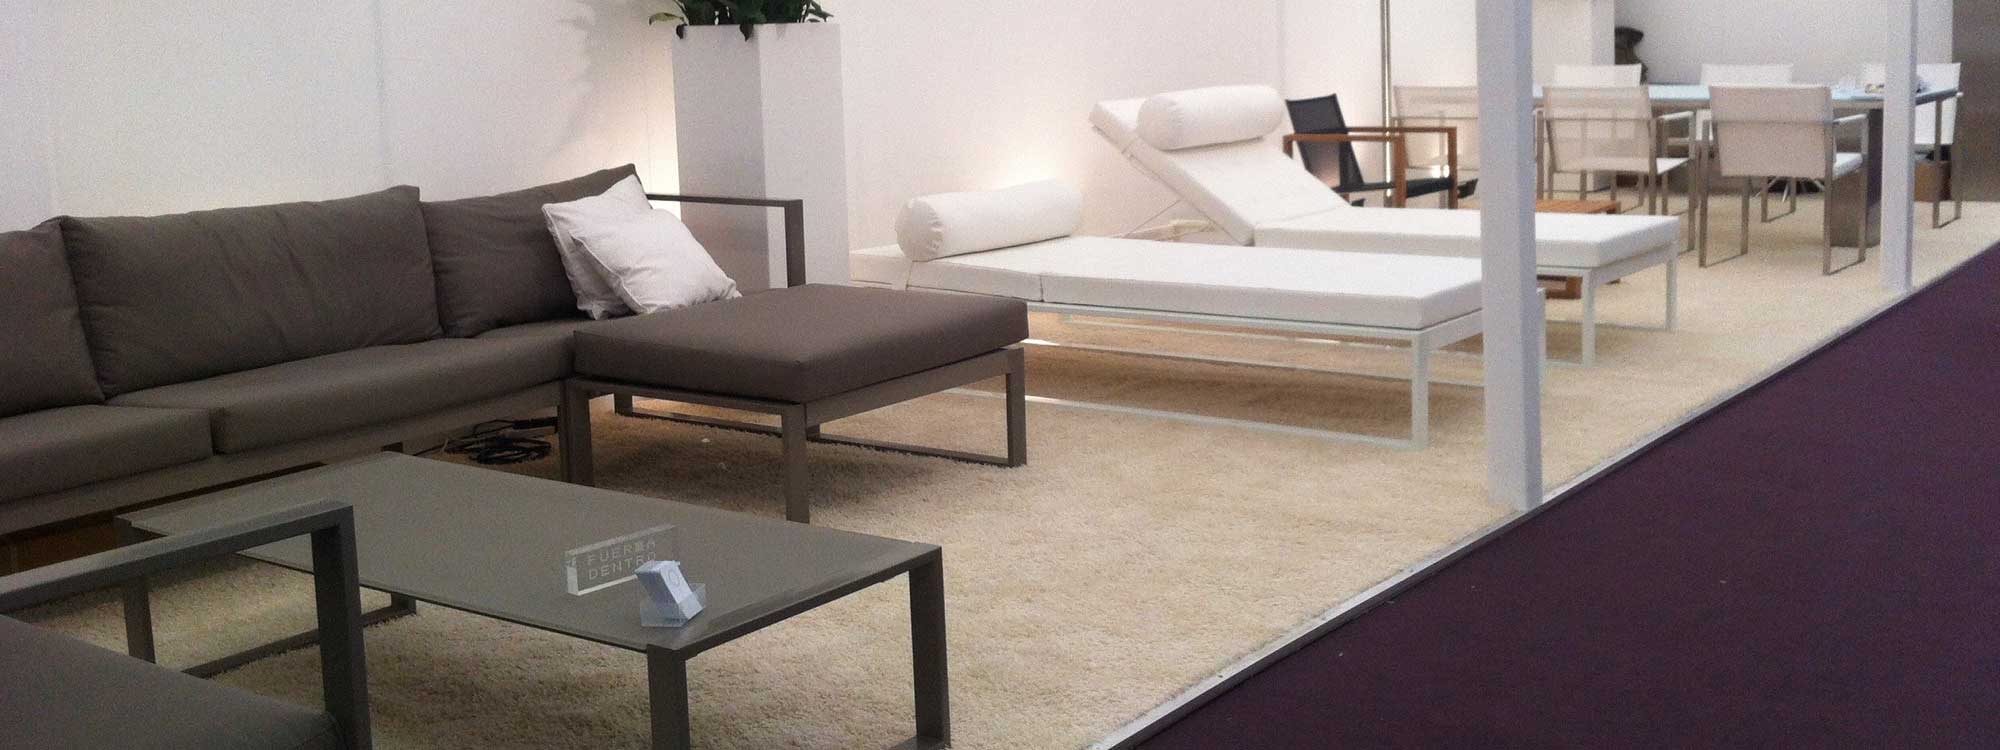 Image of the Encompass Furniture stand at Decorex, including FueraDentro minimalist garden furniture at Decorex, London